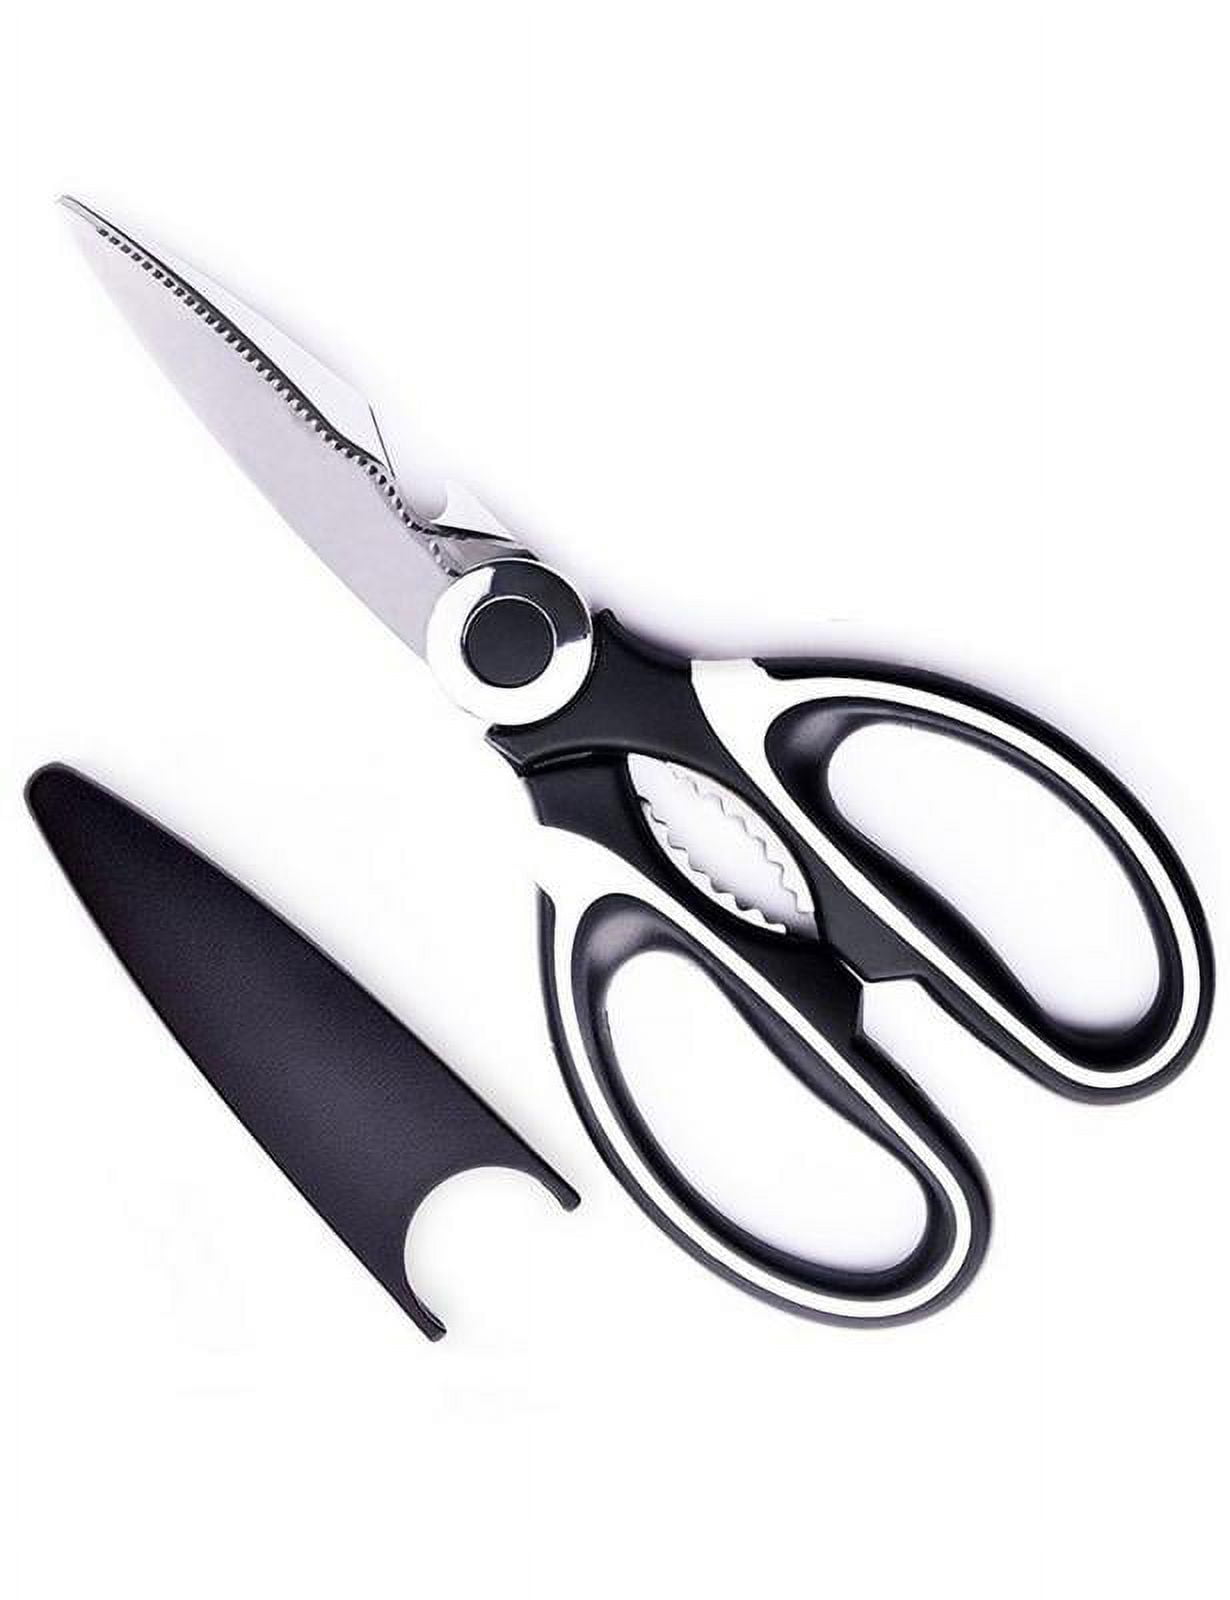  Misen Heavy Duty Kitchen Shears - Versatile Kitchen Scissors  for Meat, Poultry & More - Easy Clean Kitchen Shears/Scissors -  Ambidextrous Comfort Handle - Gray : Home & Kitchen